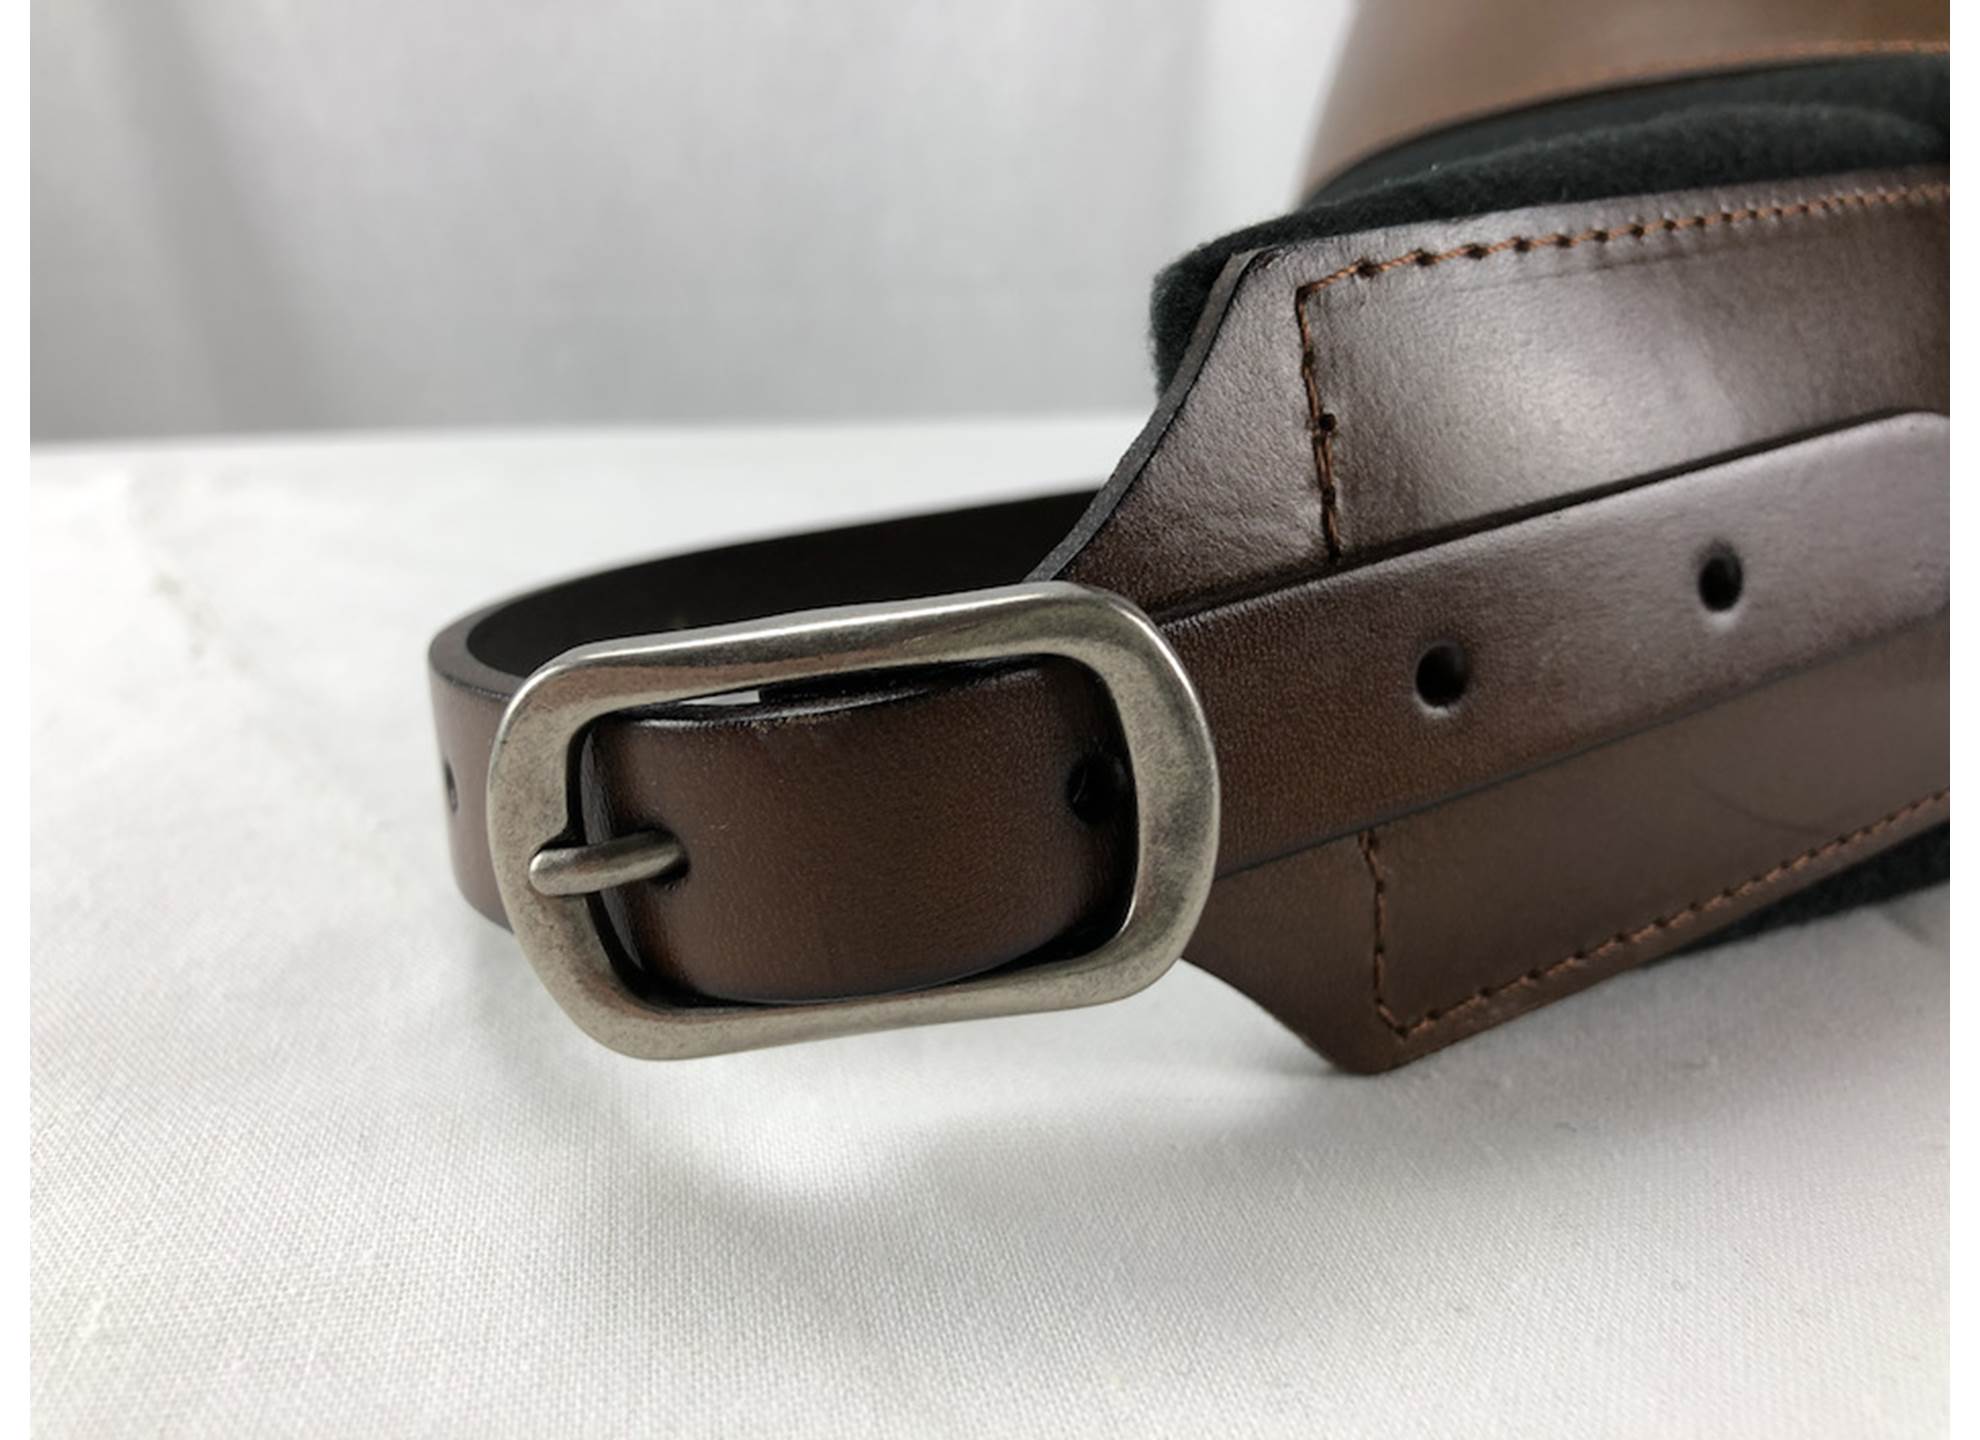 FPB02 Pro Italian Leather Strap Dark Tan